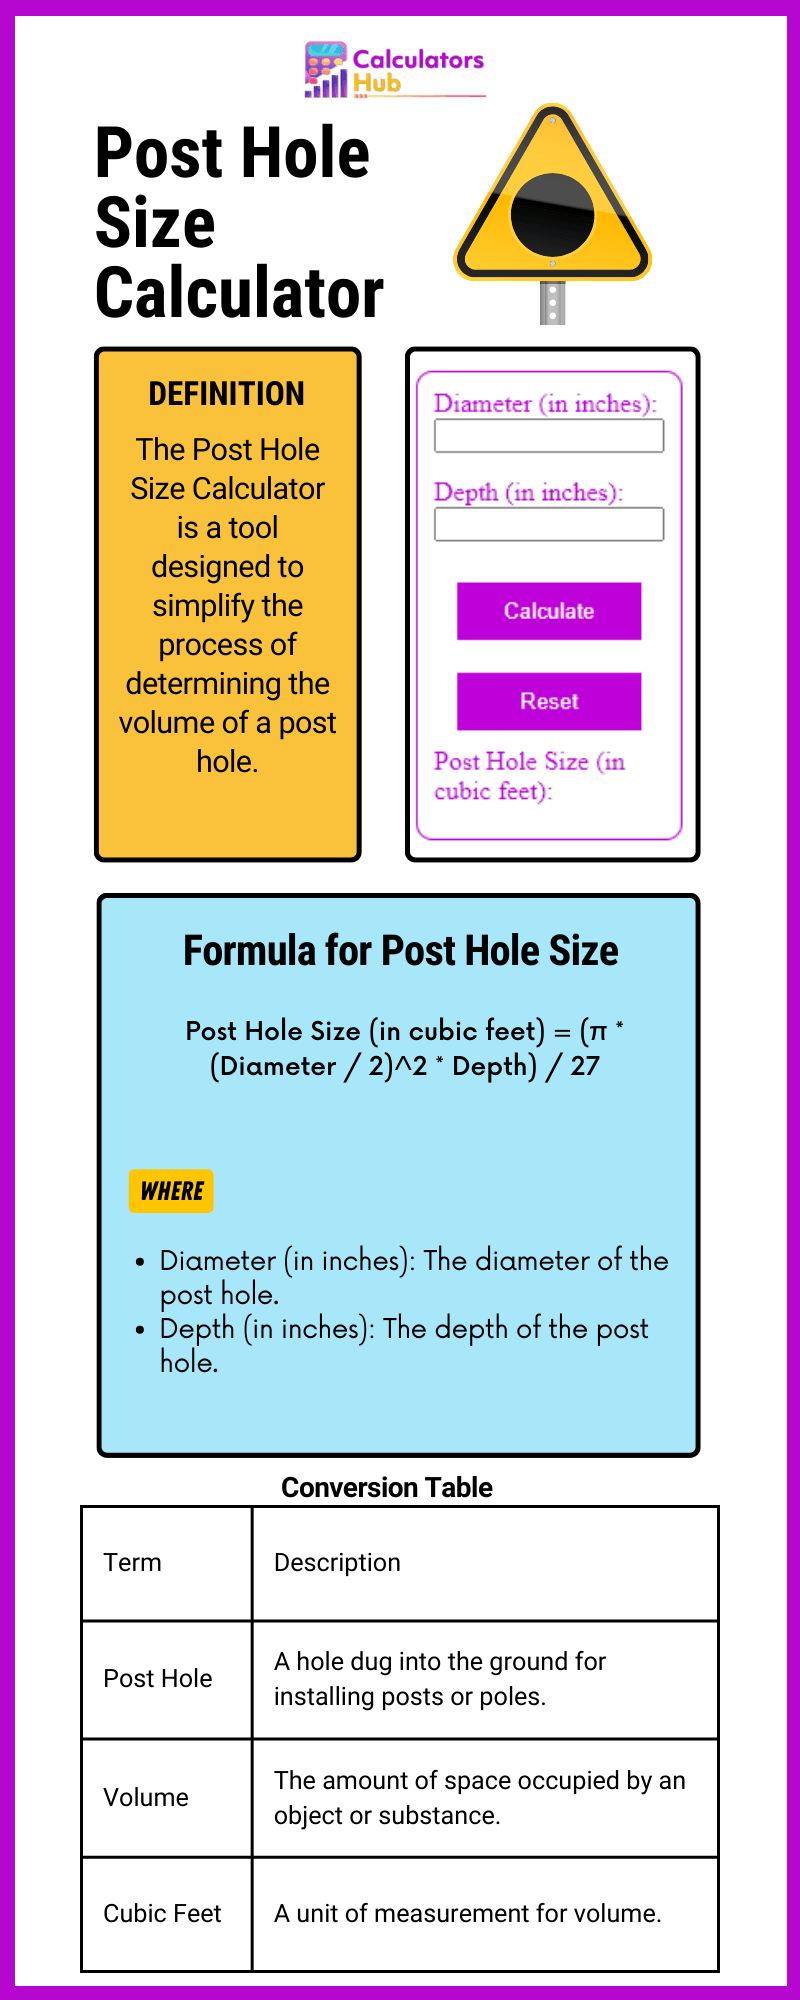 Post Hole Size Calculator